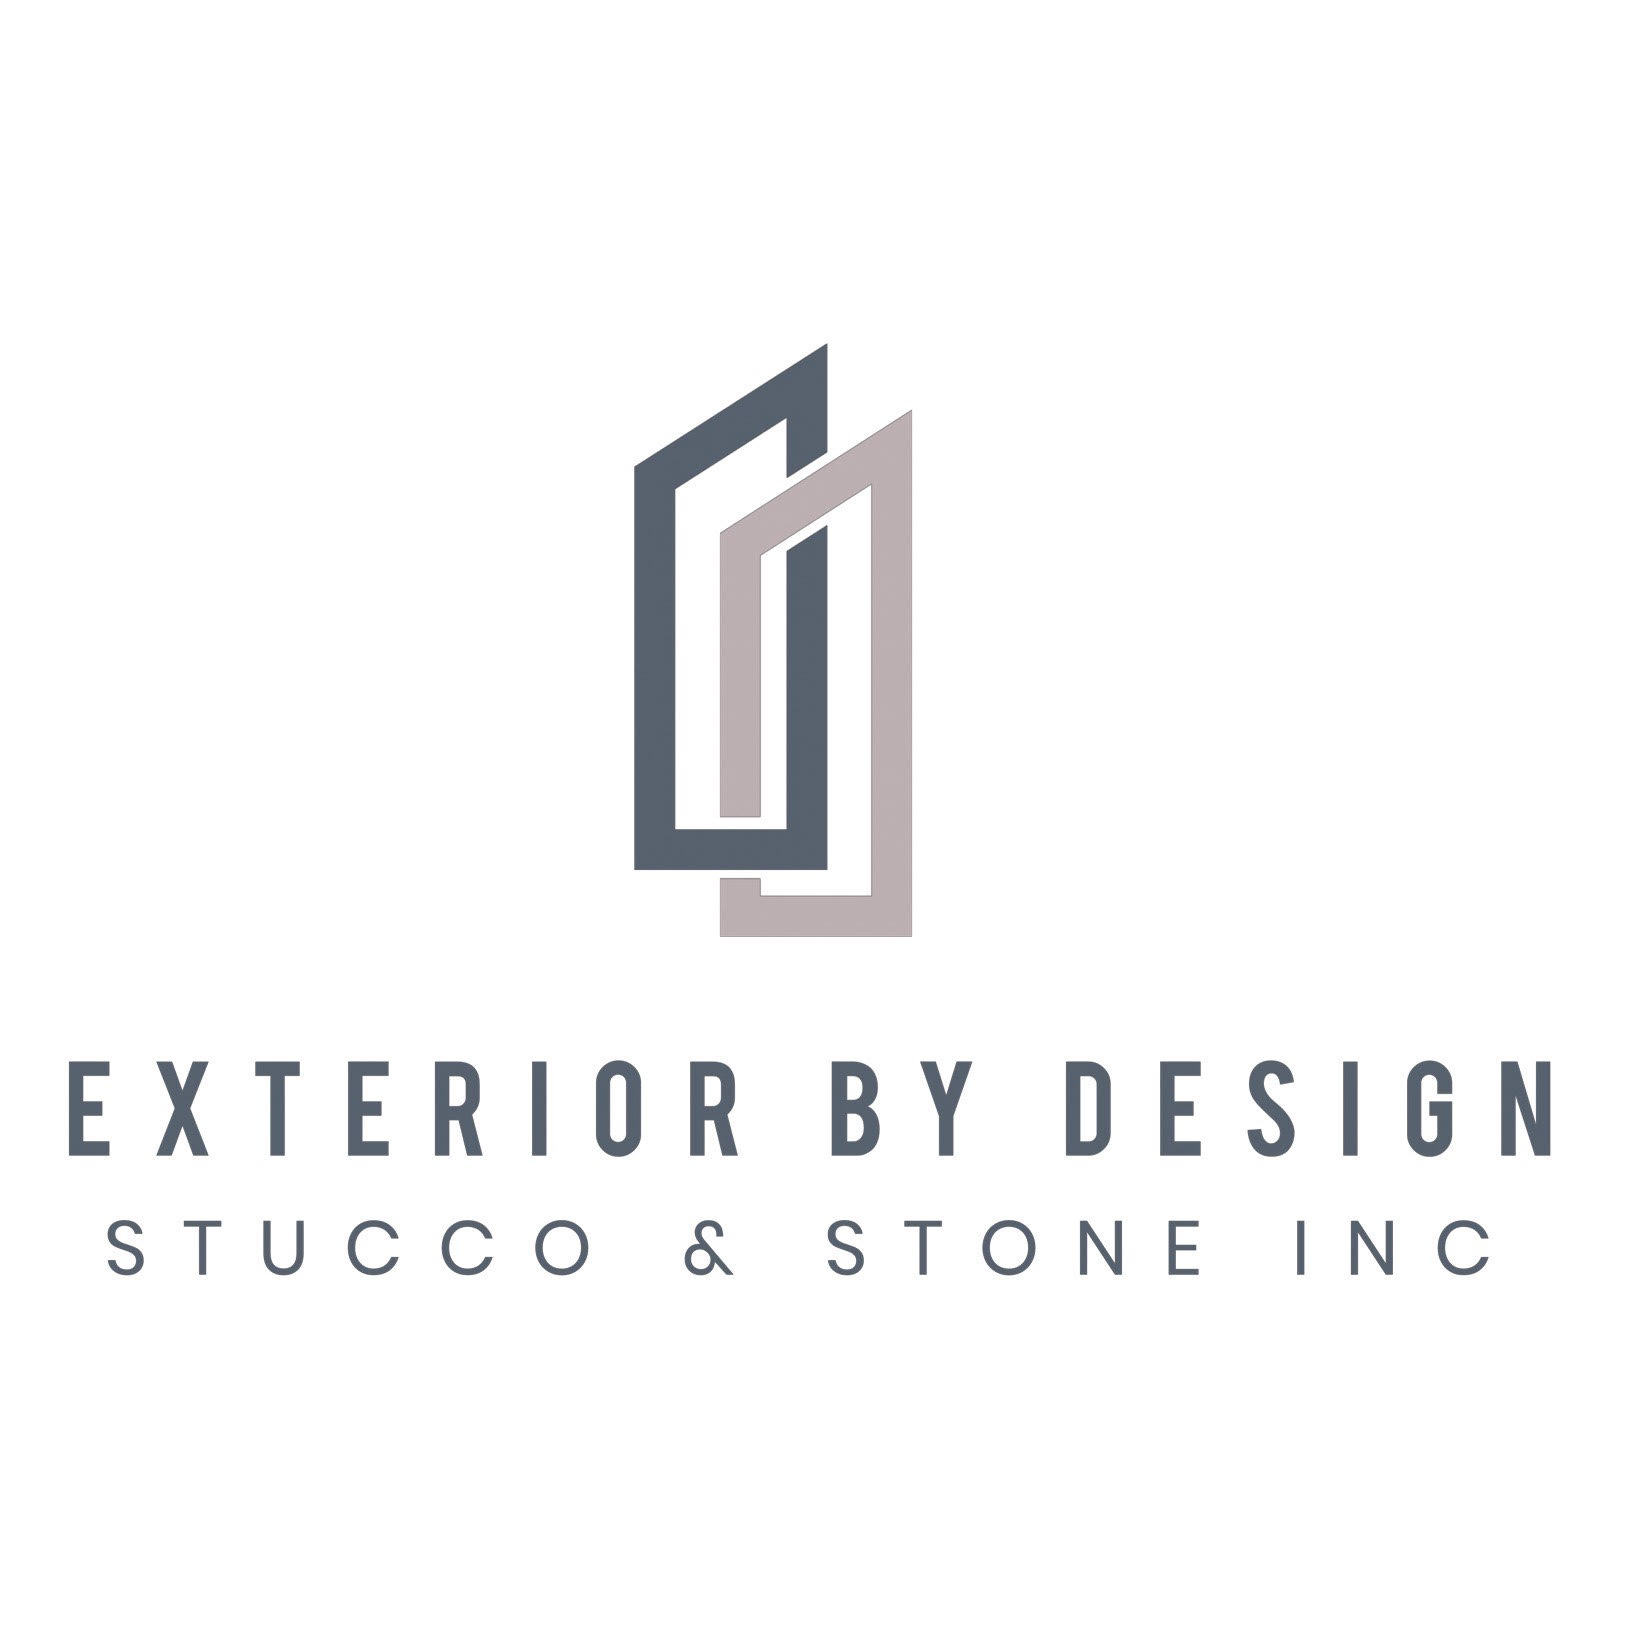 Exterior By Design Stucco And Stone Inc's logo